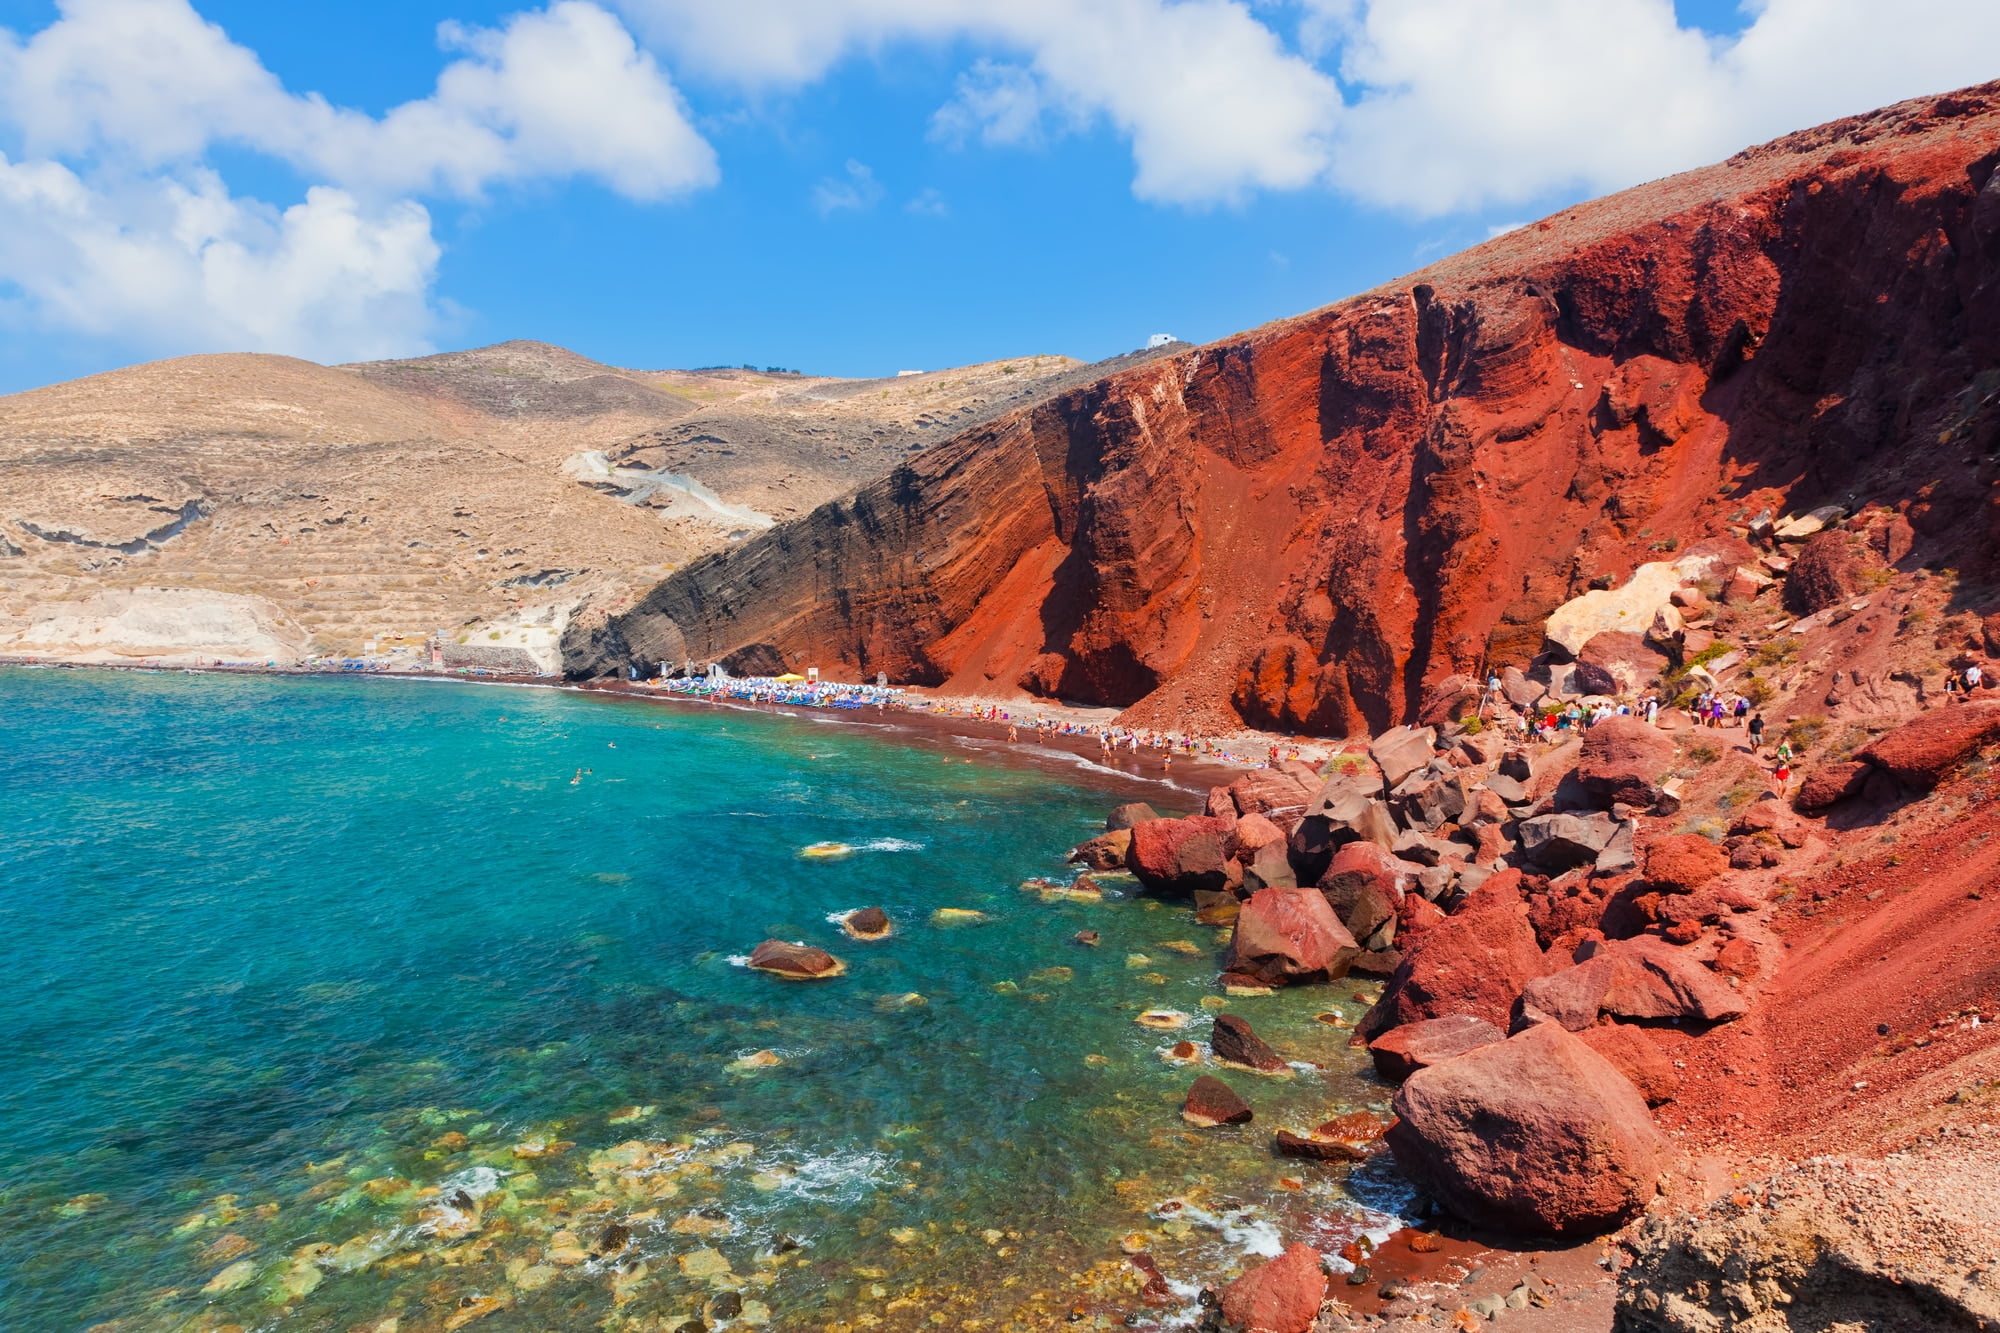 Red beach on Santorini island, Greece. Volcanic rocks